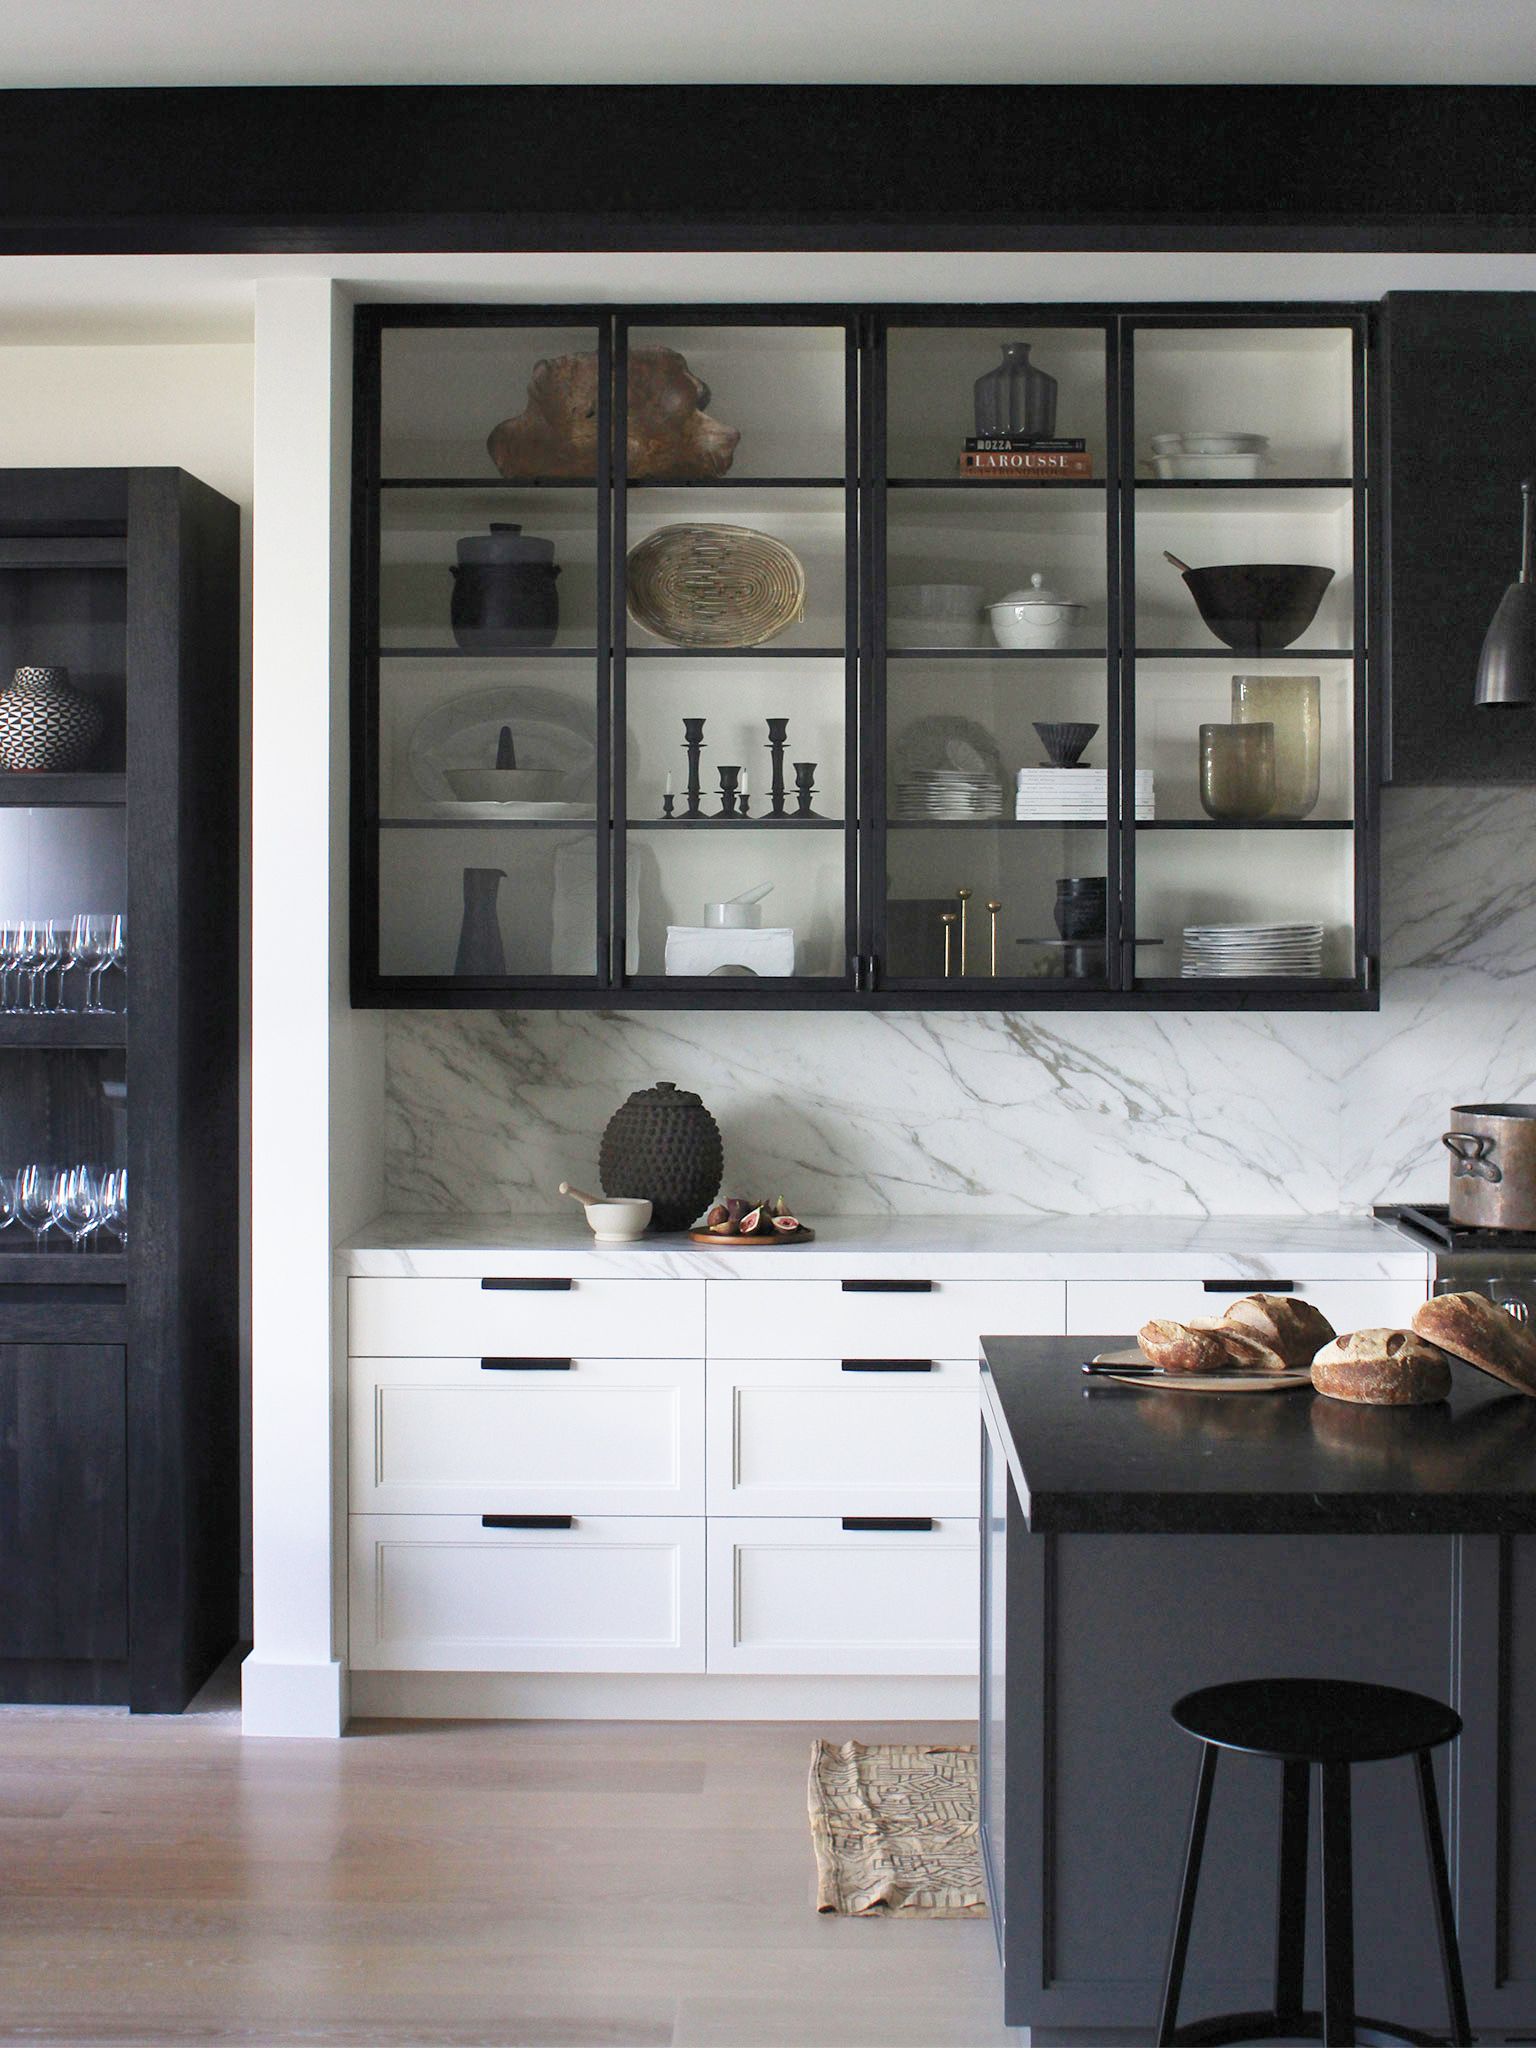 55 kitchen cabinet design ideas 2020 - unique kitchen